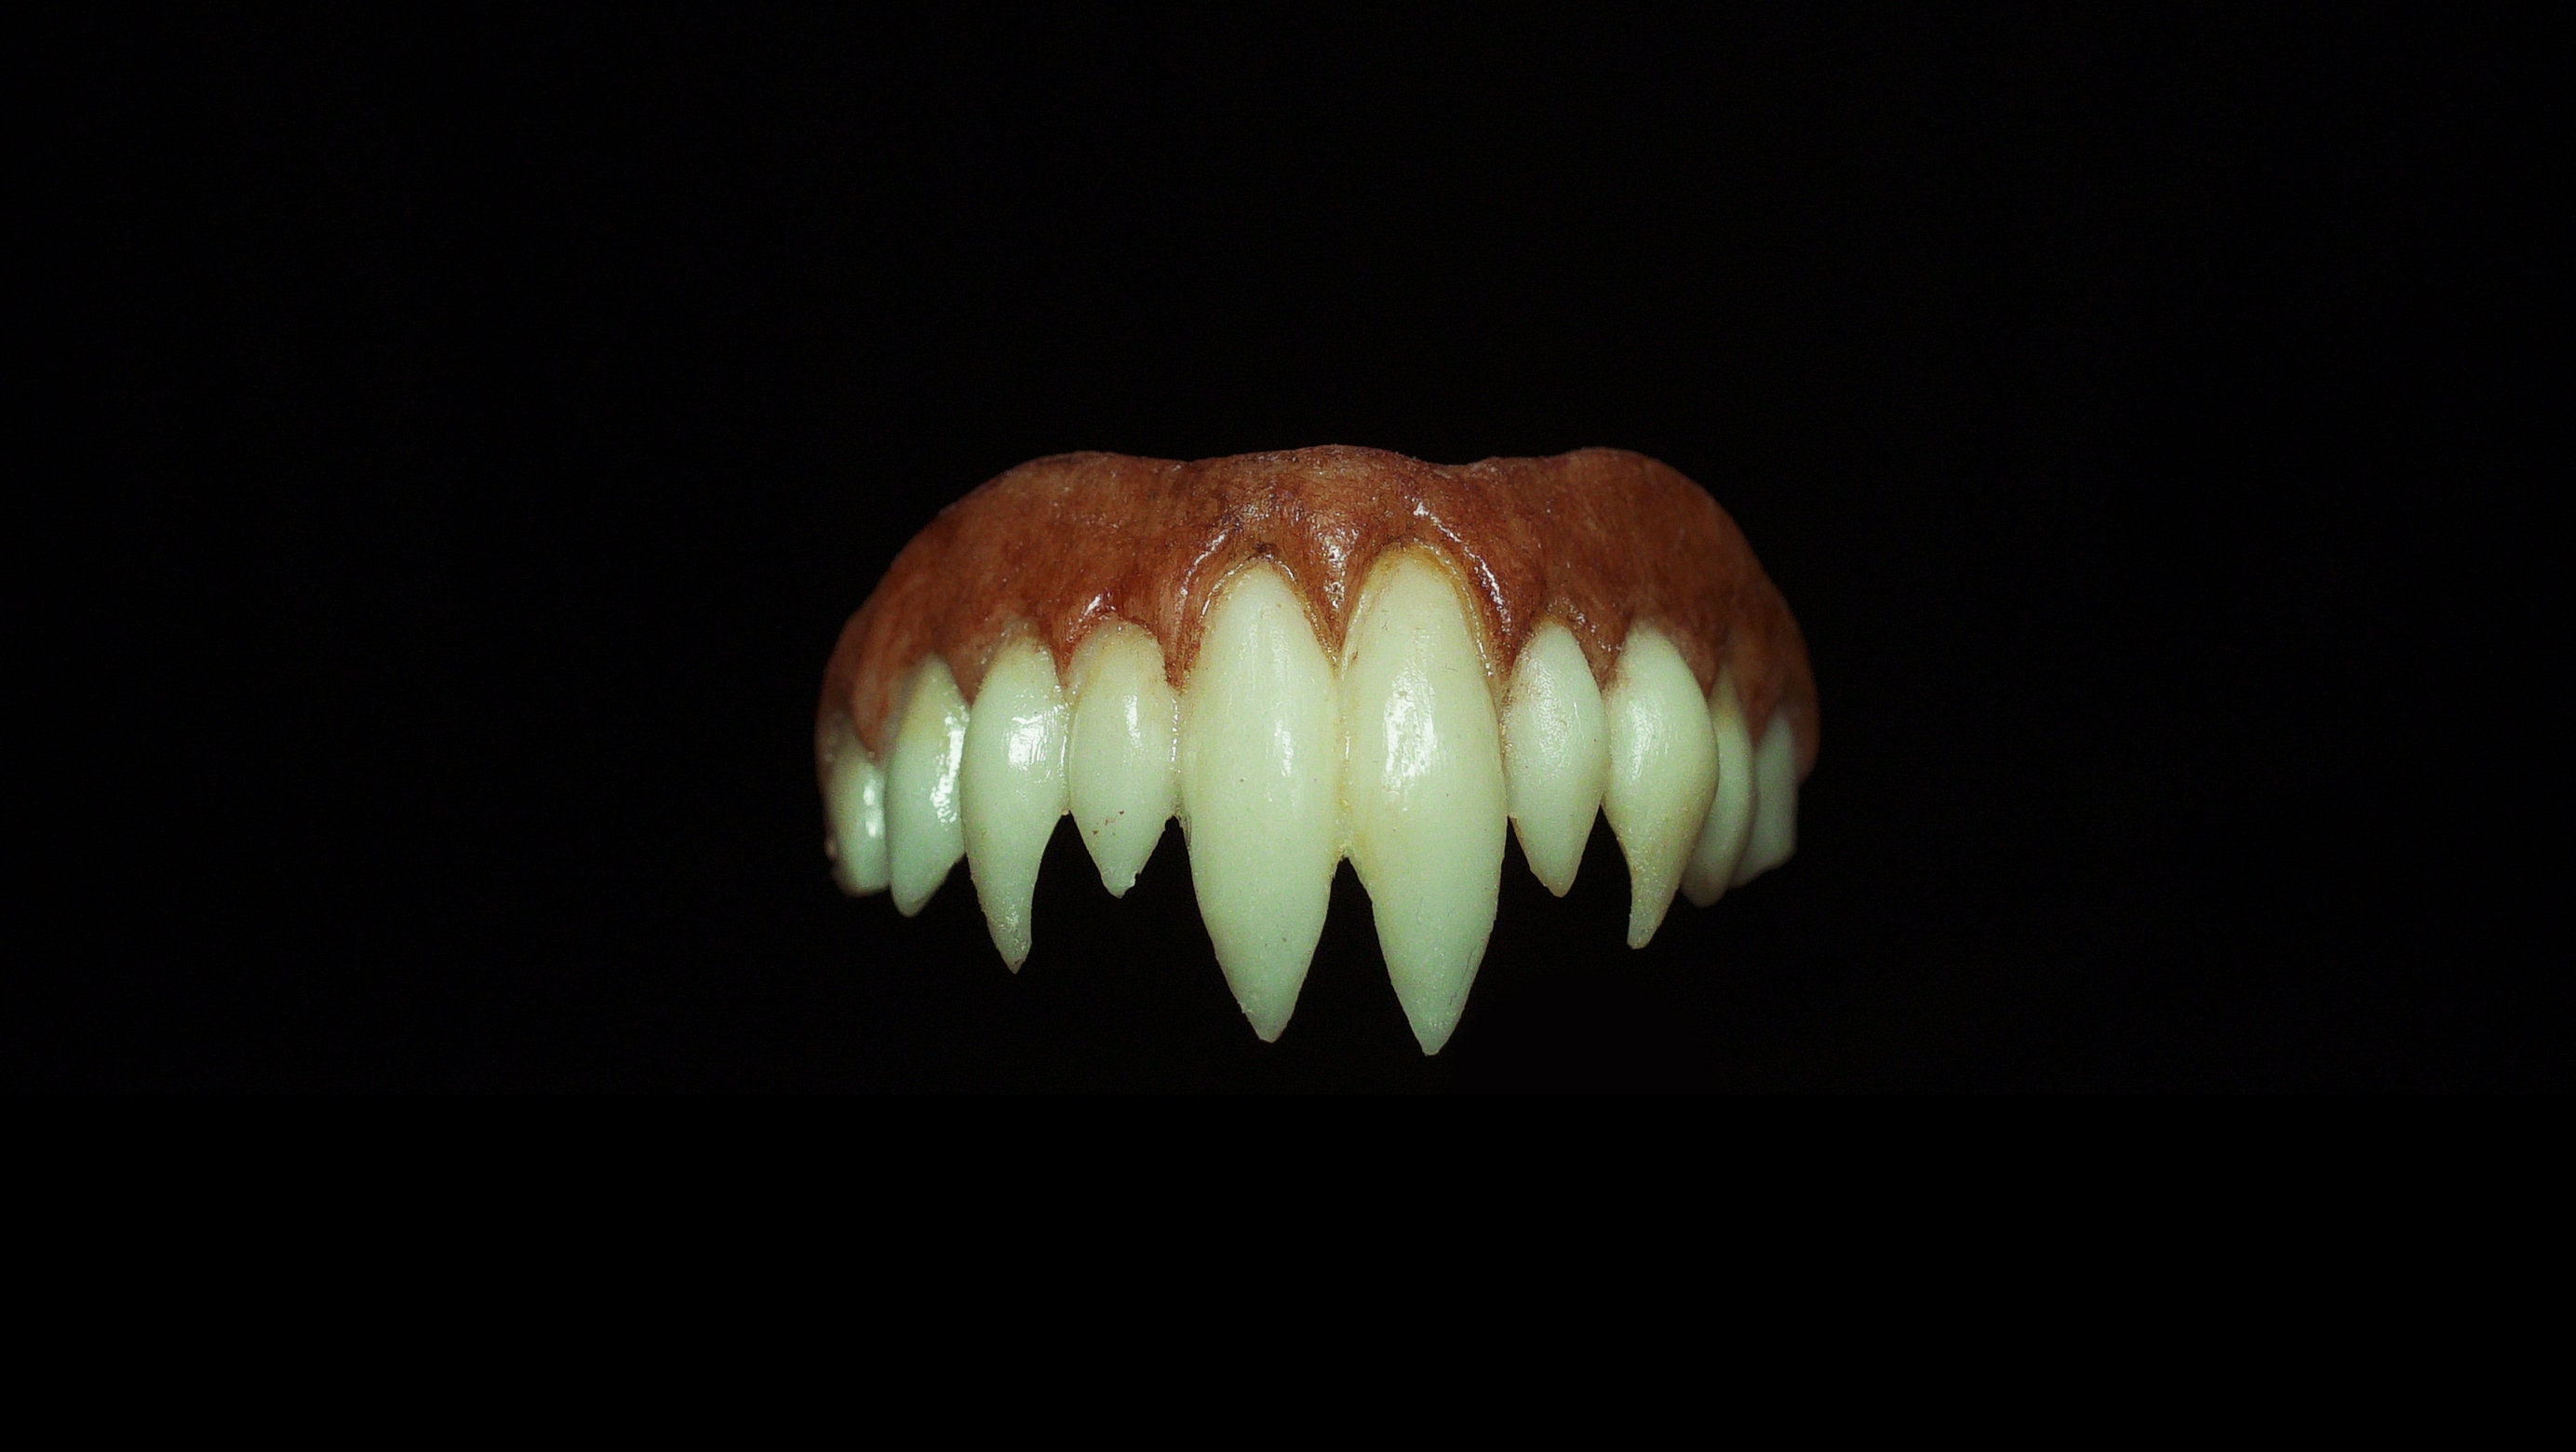 Grell teeth / Vampire fangs 🎃 Halloween